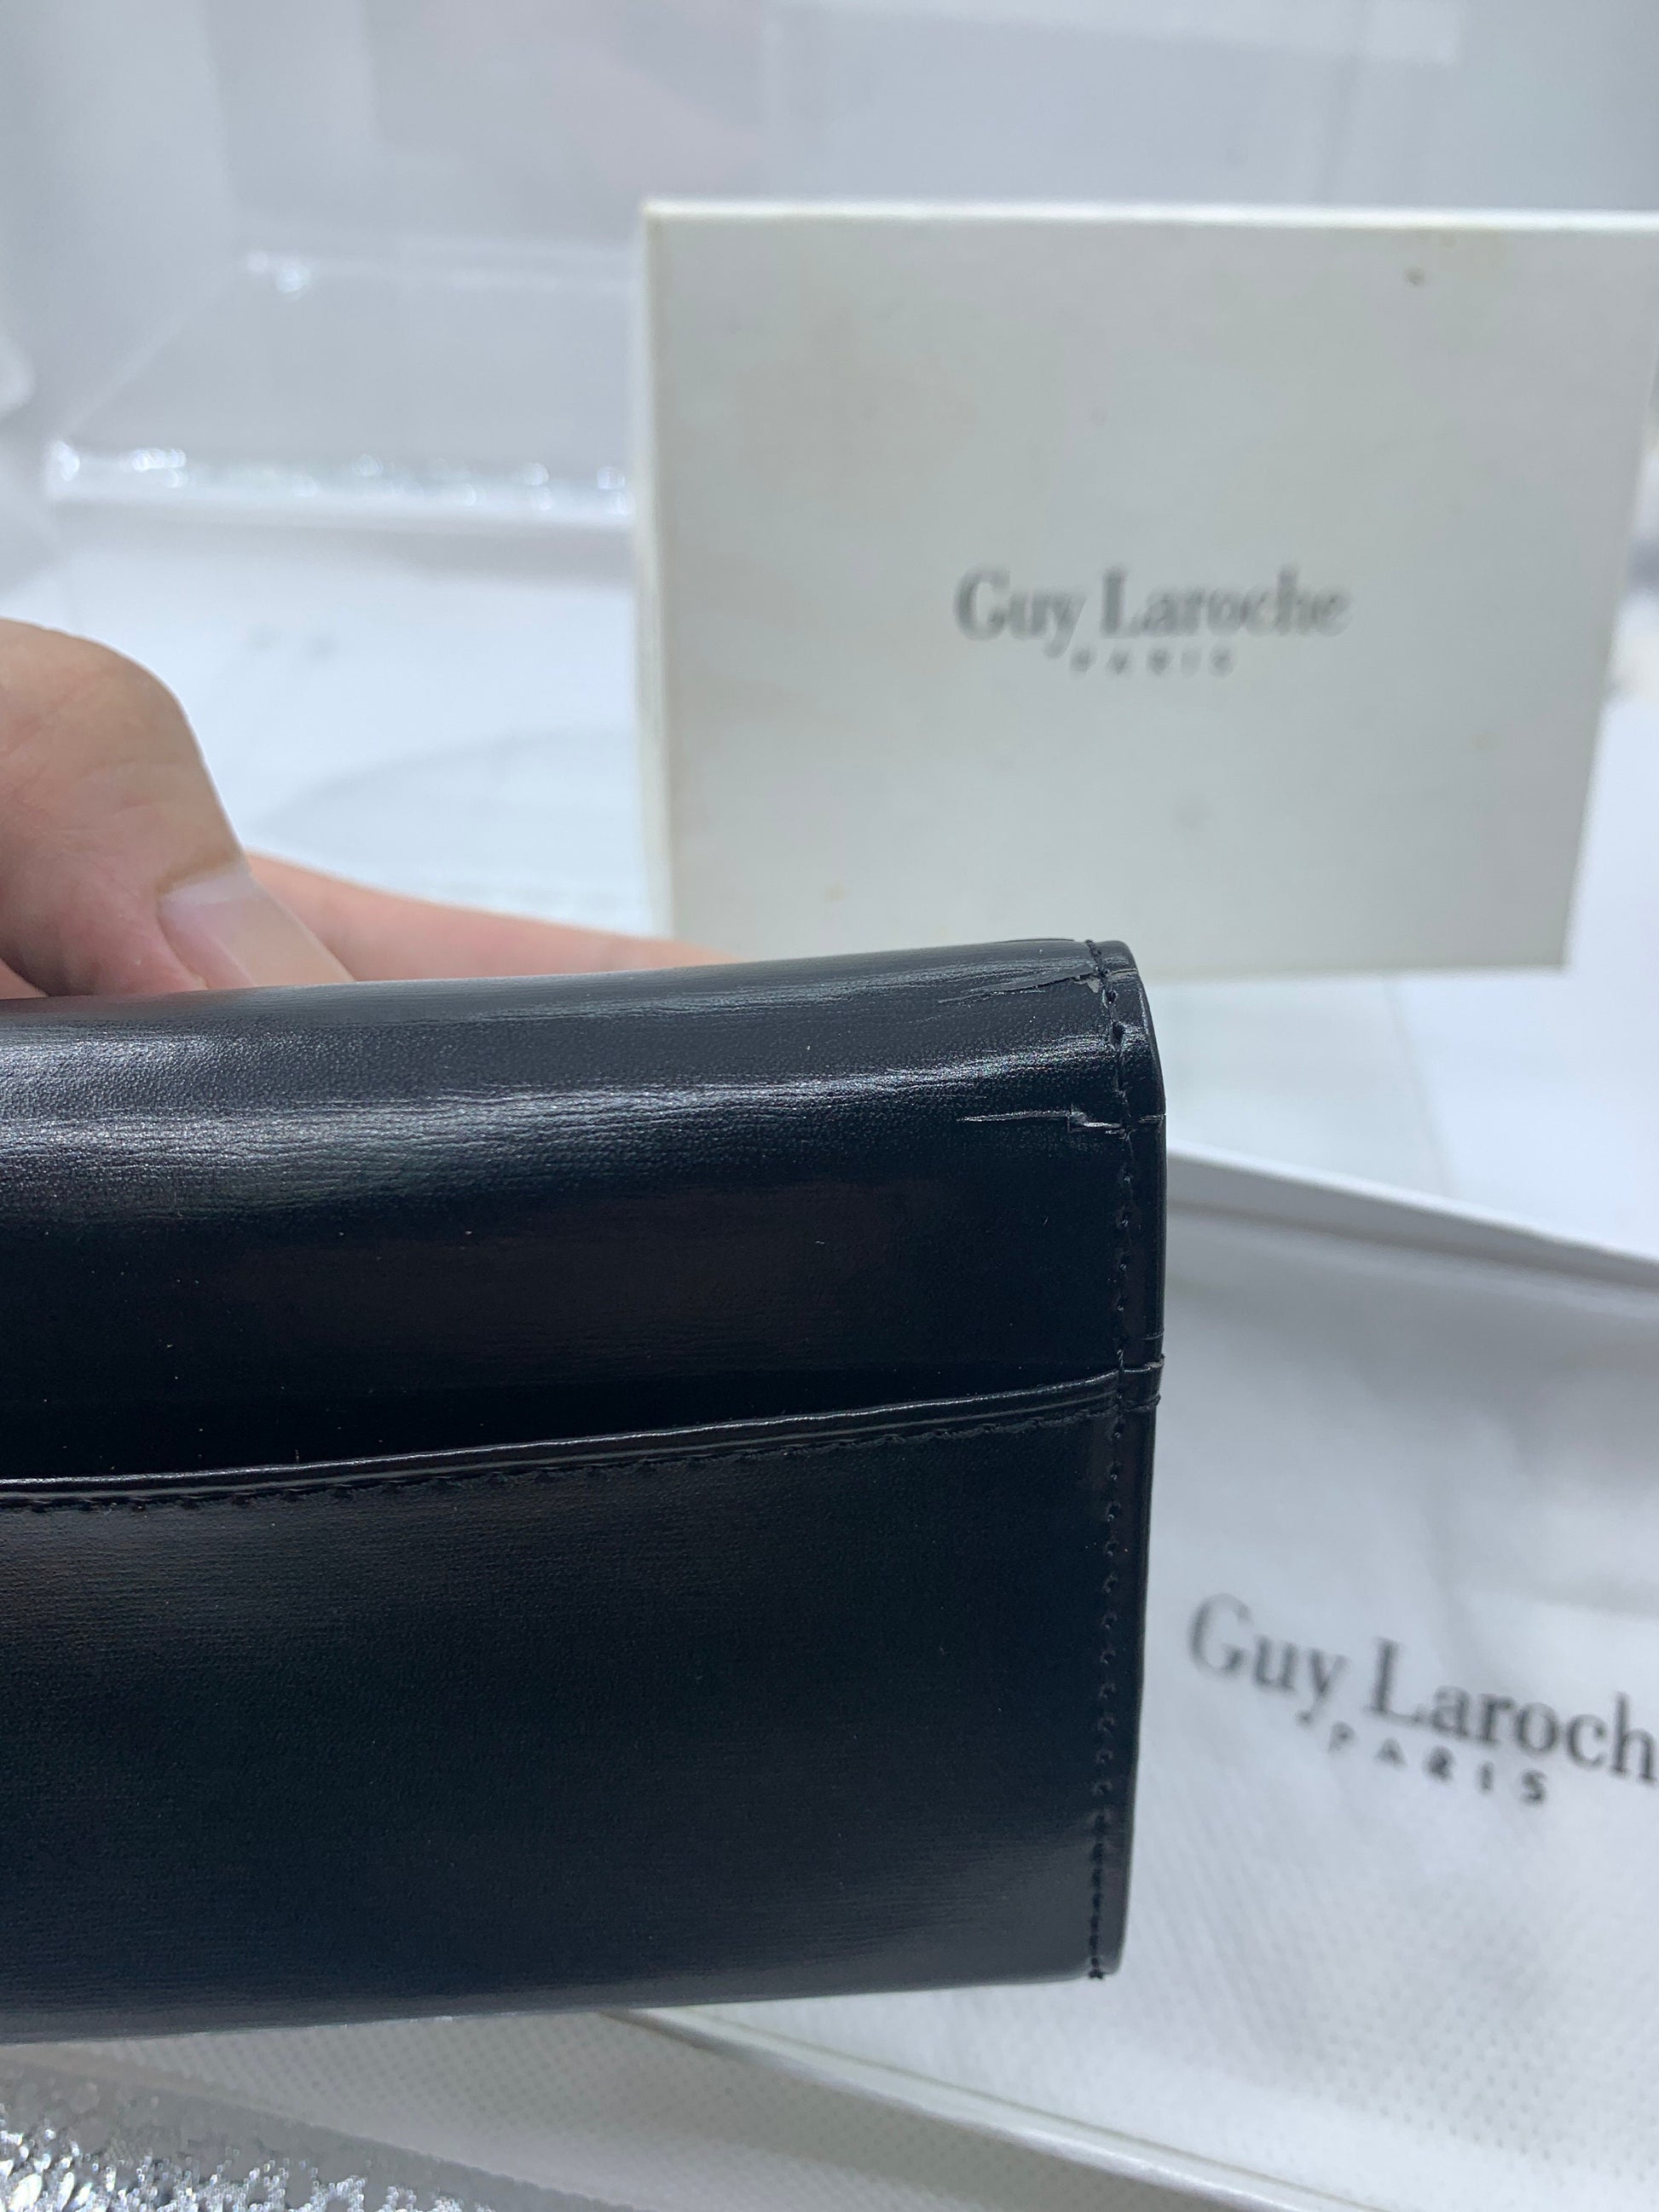 Guy Laroche Large Bag